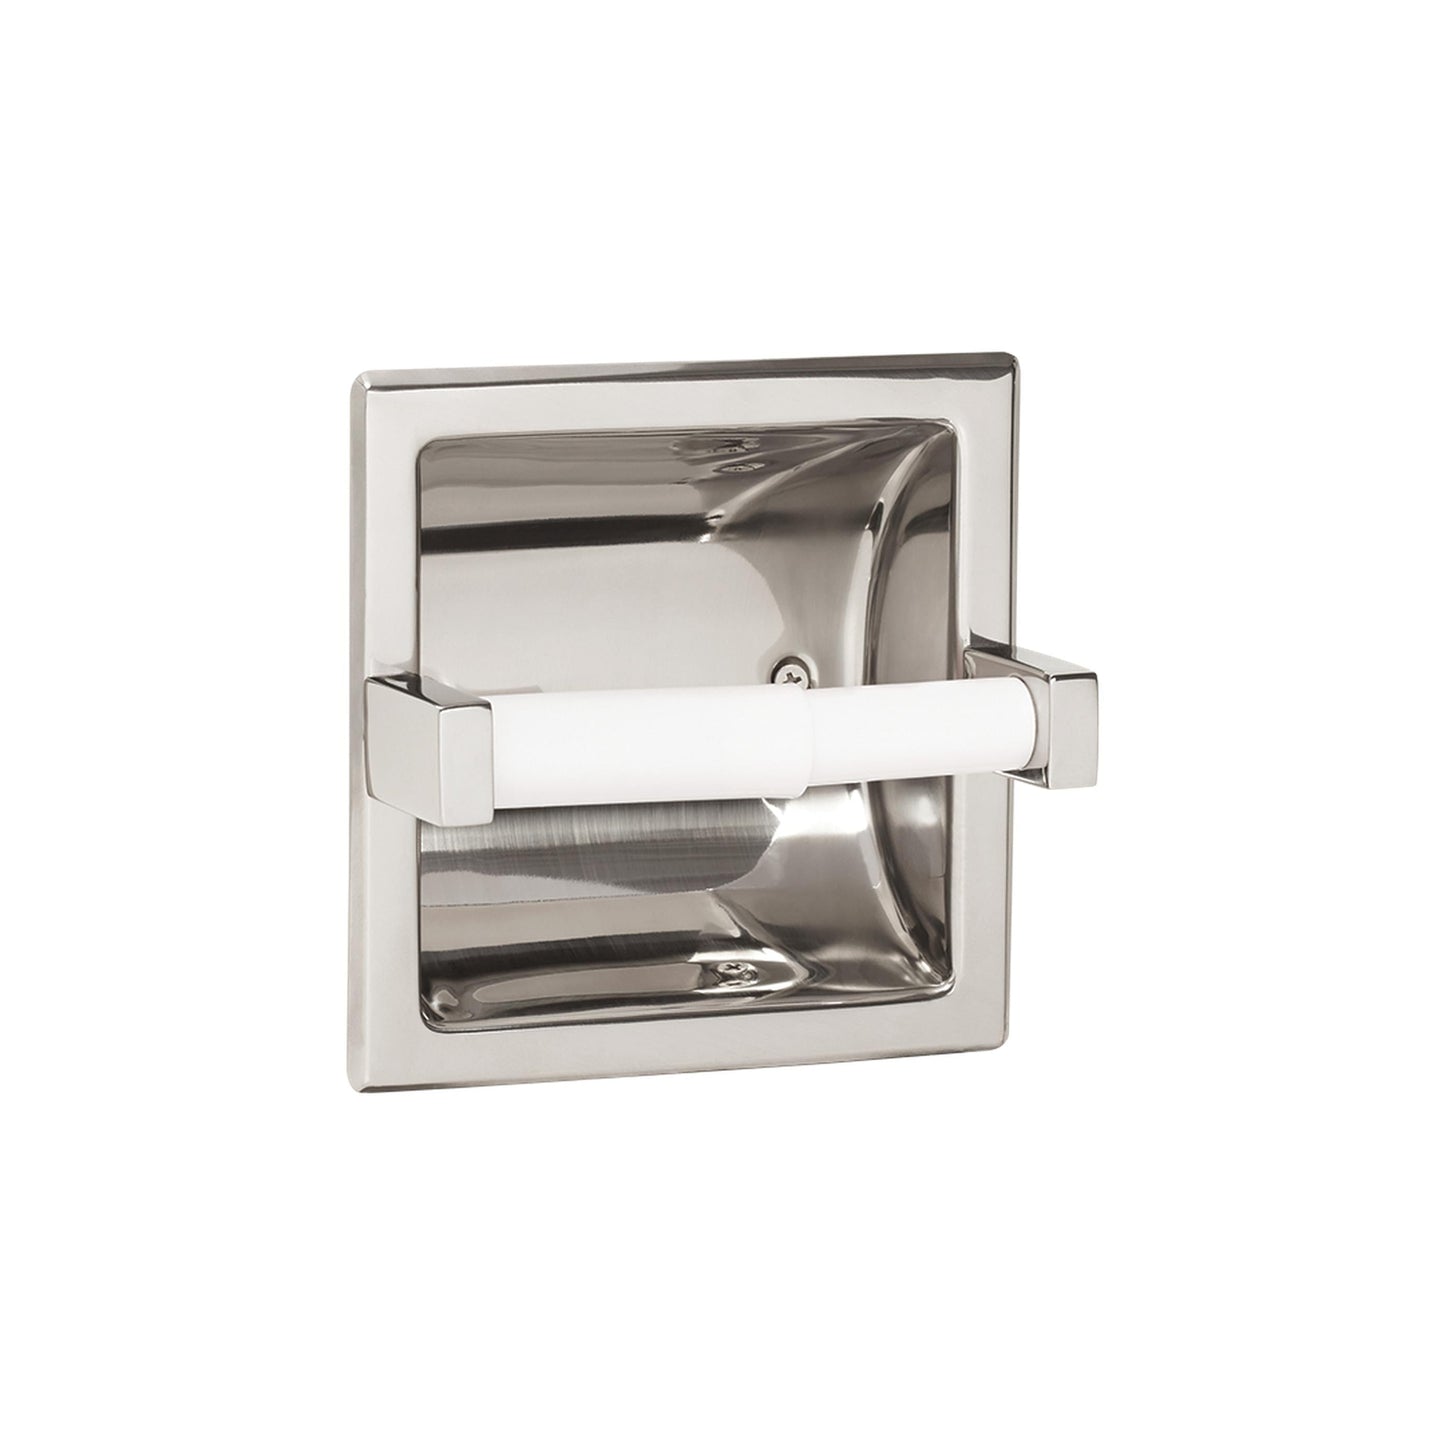 Seachrome Cal Series Recessed Single Toilet Paper Holder